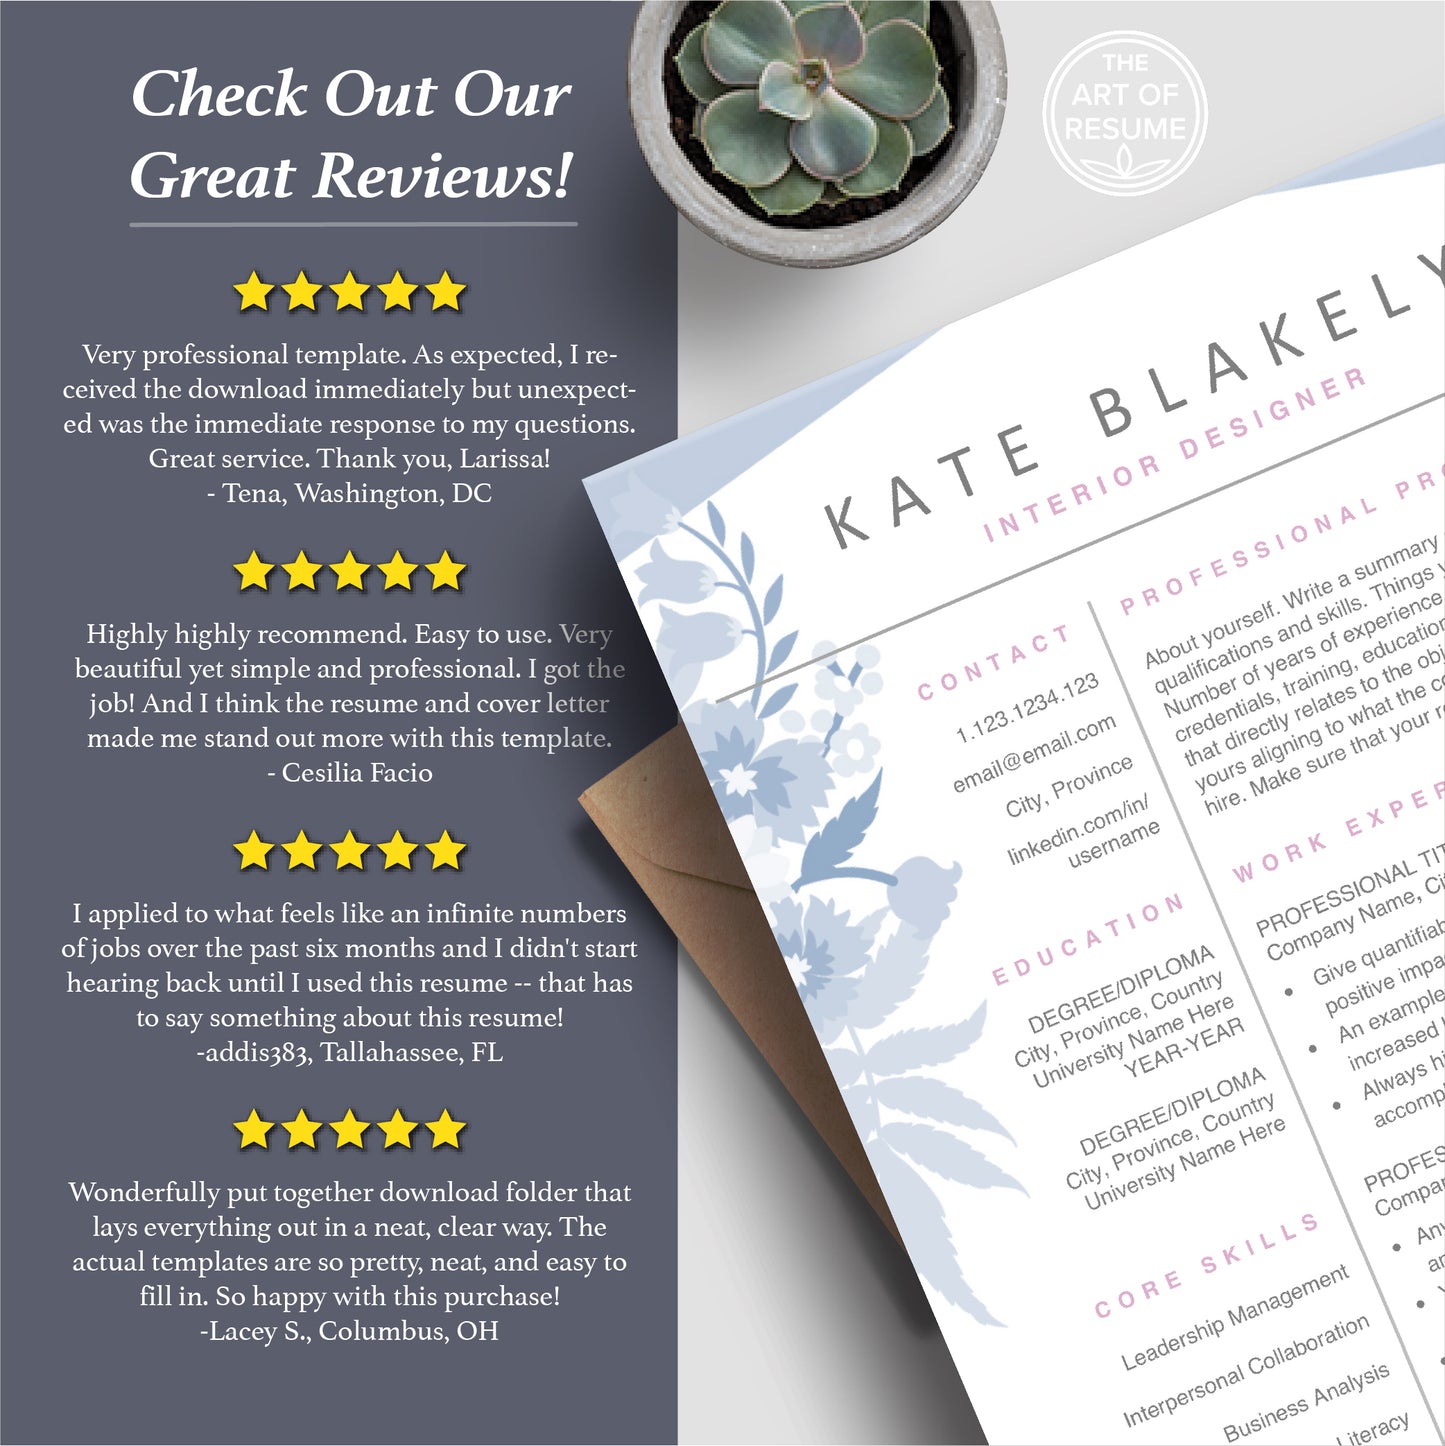 The Art of Resume | Blue Floral Resume Template Design Best Resume Reviews